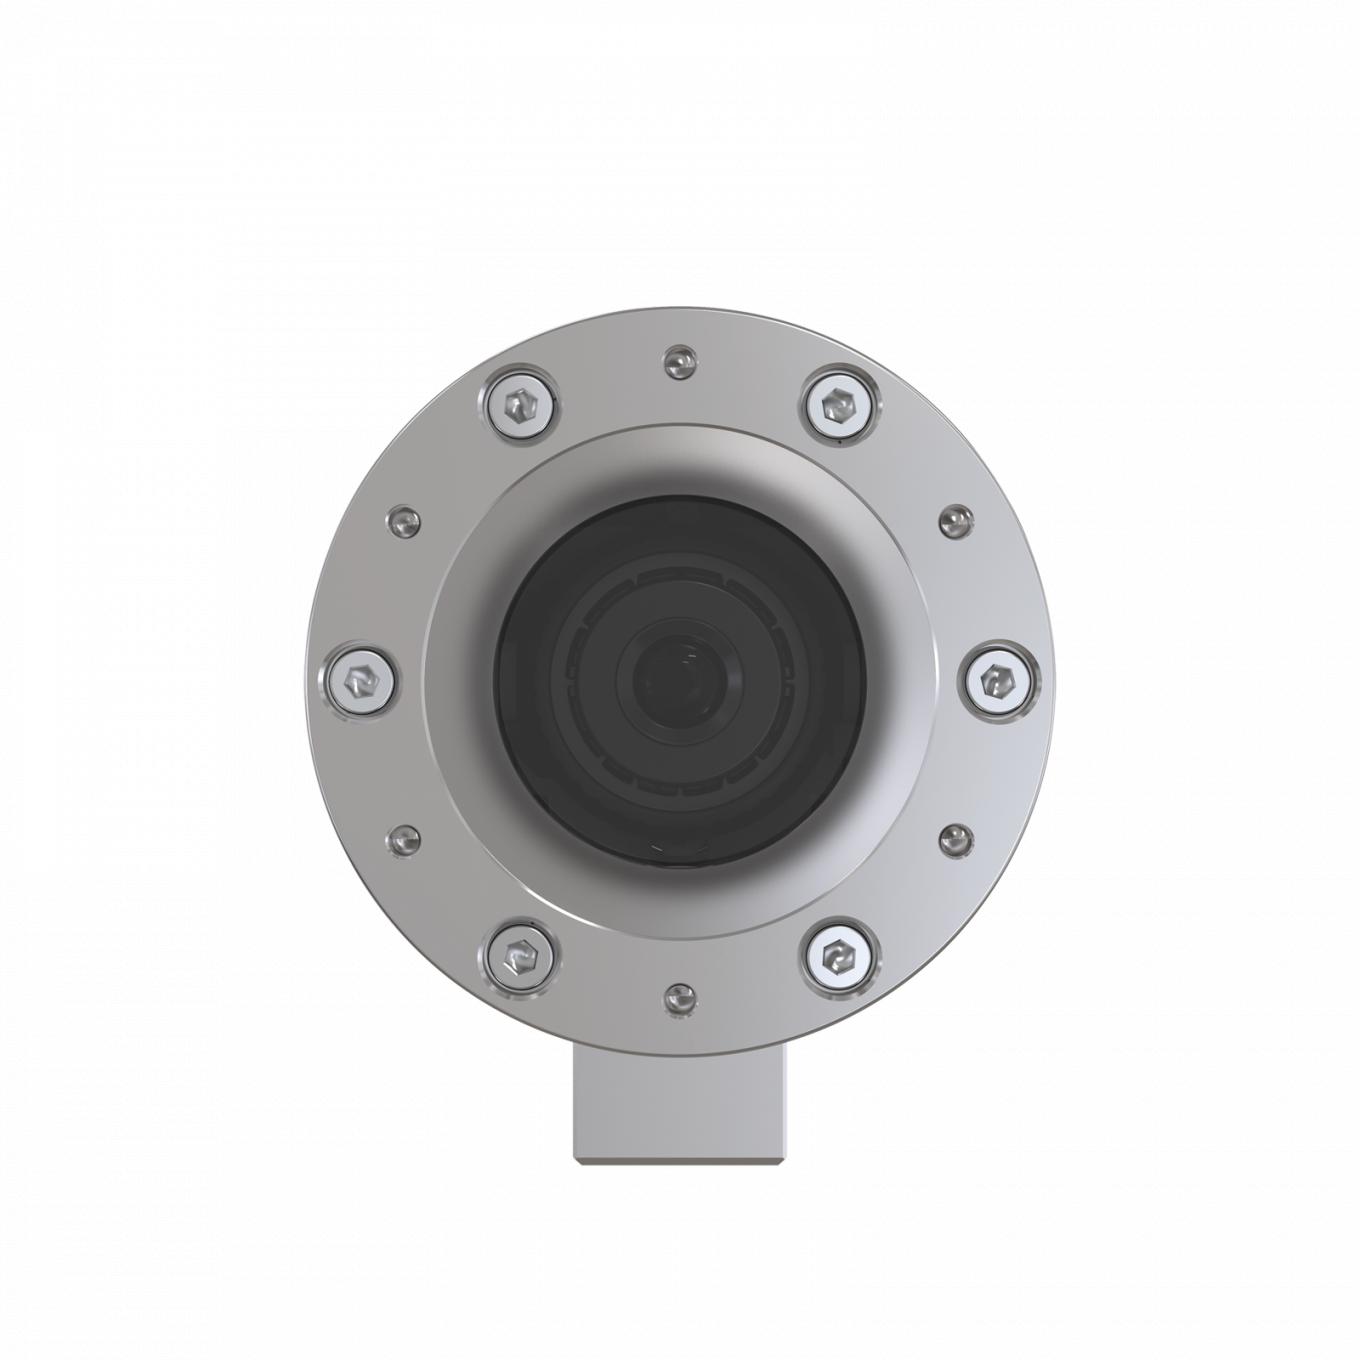 ExCam XF M3016 Explosion-Protected IP Camera цвета нержавеющей стали, вид спереди